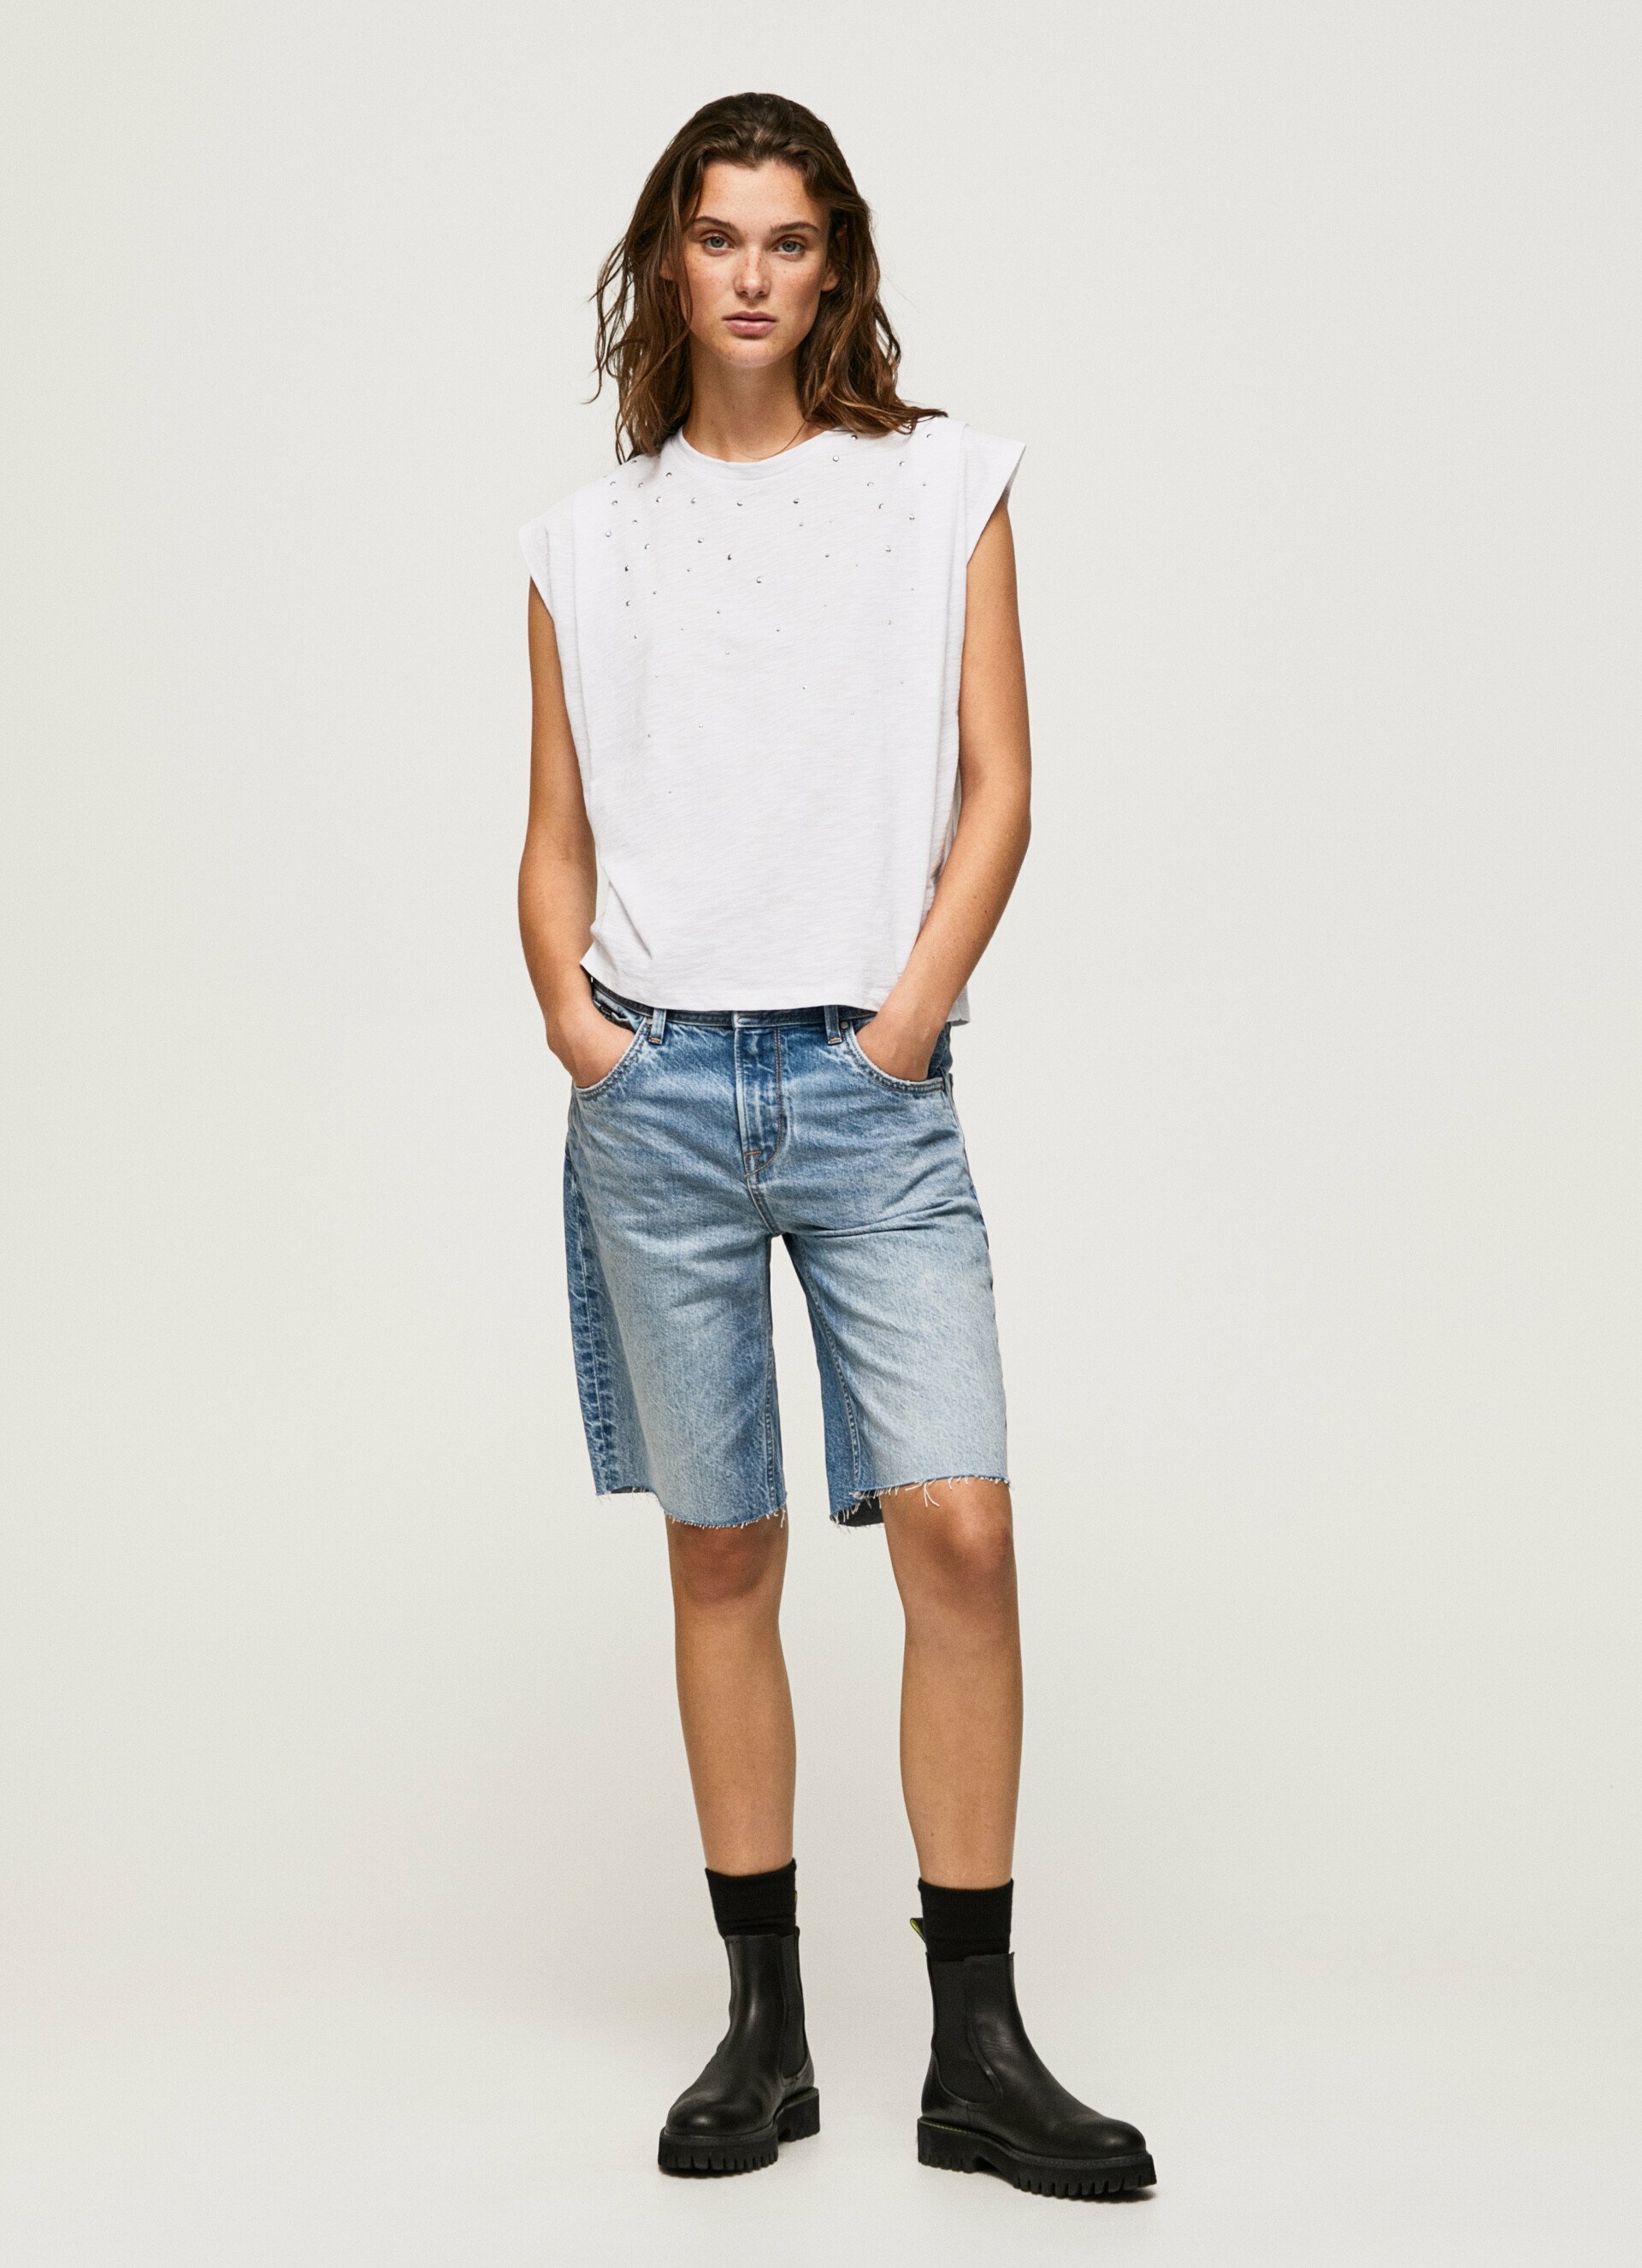 Pepe Jeans dámské bíle triko  MORGANA s cvoky - S (800)